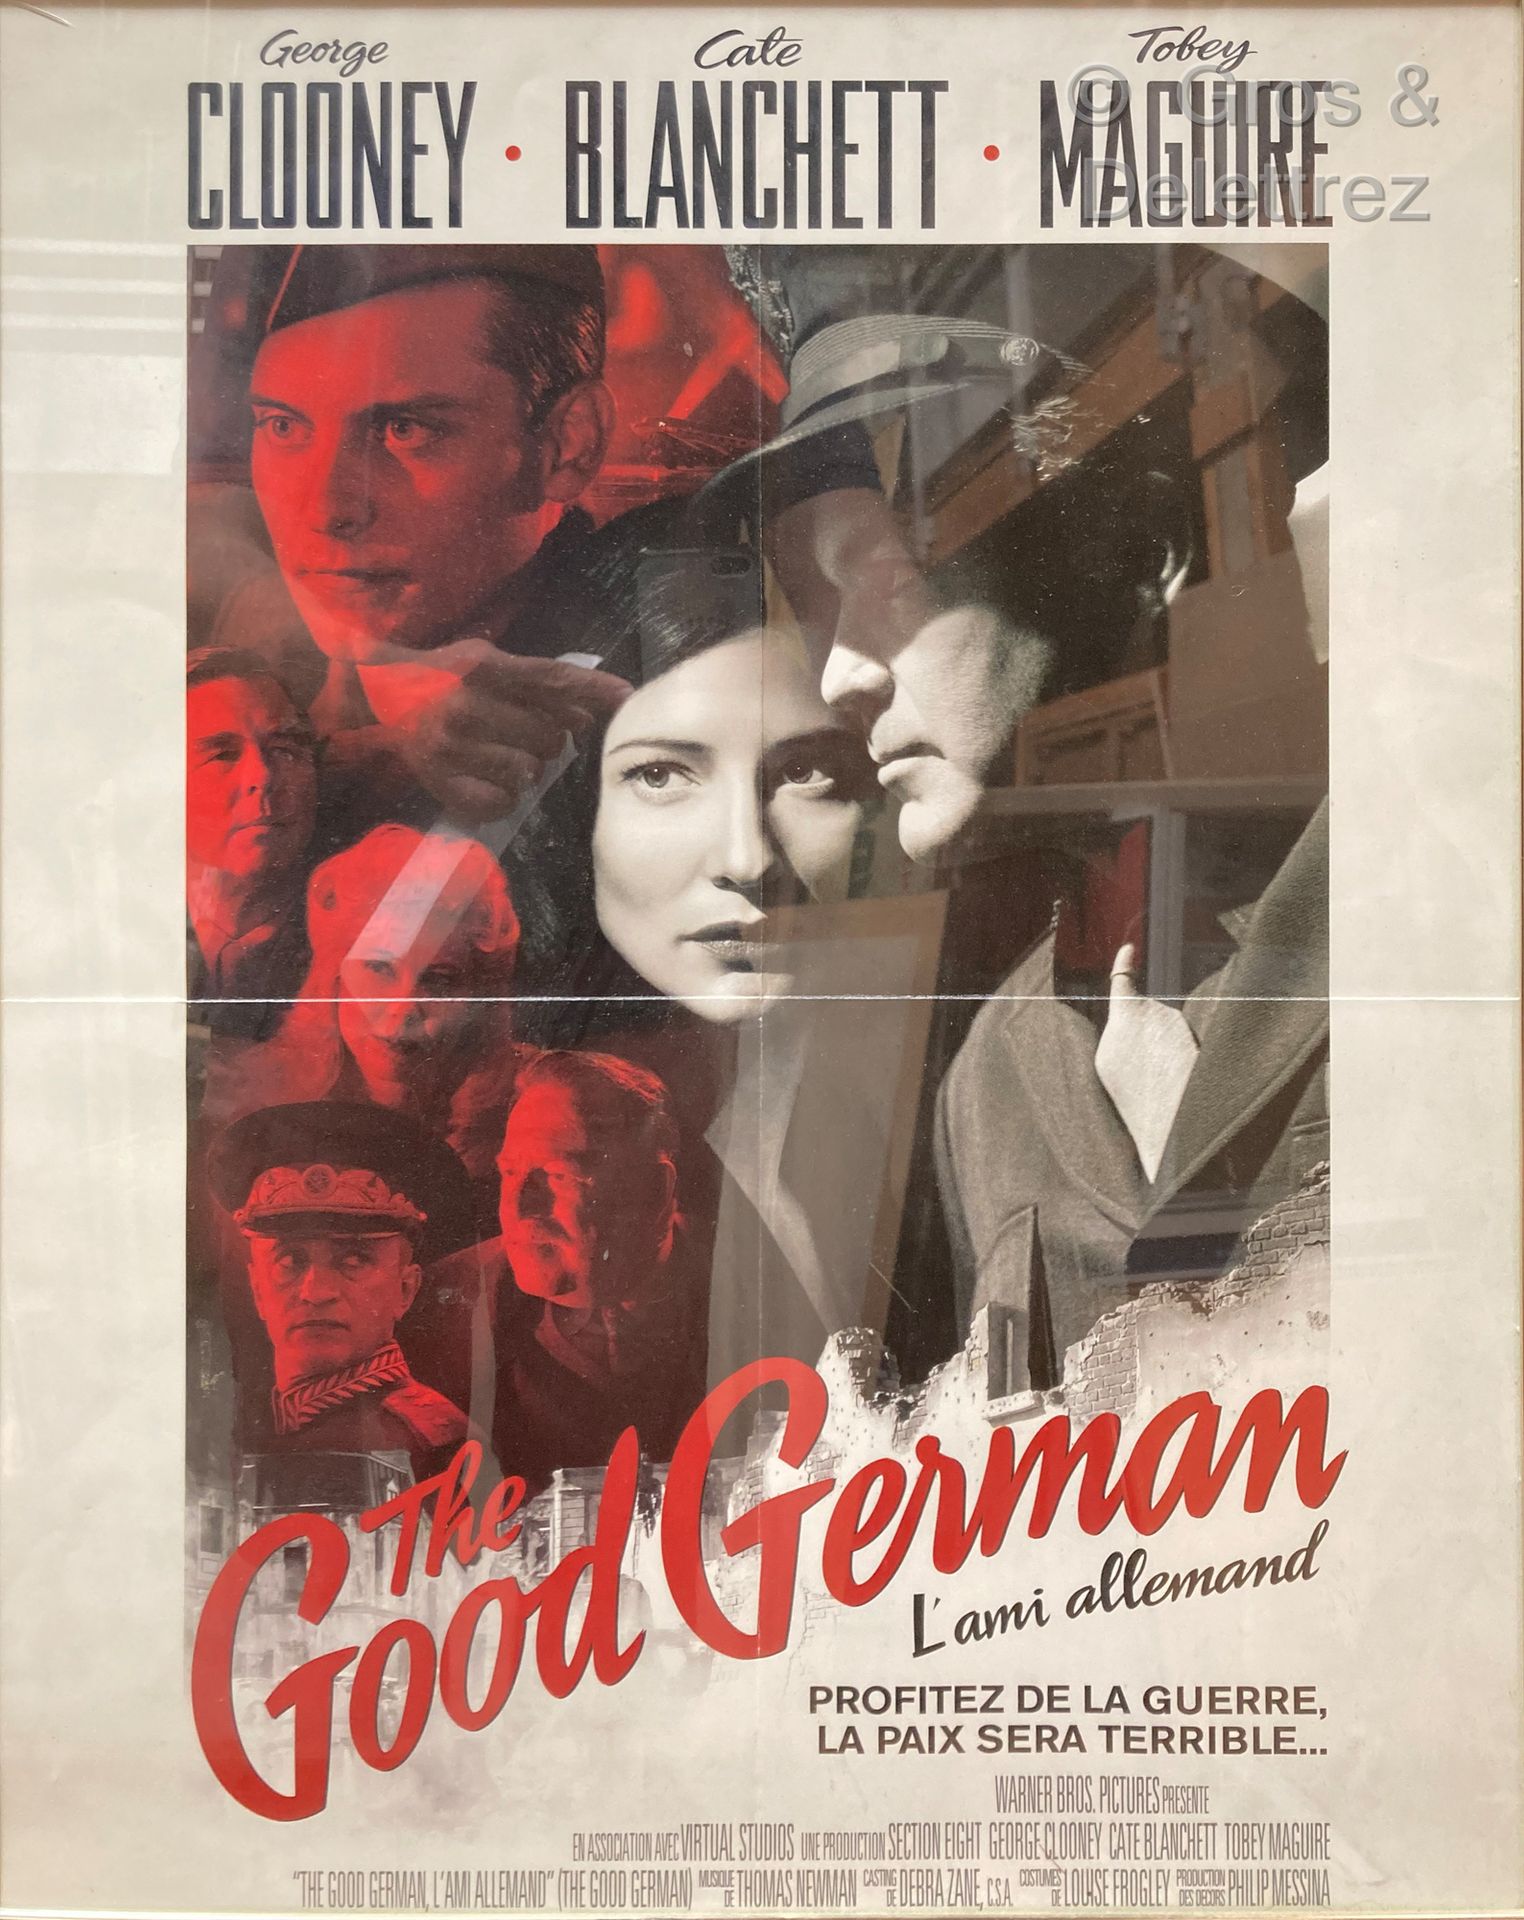 Null 与乔治-克鲁尼合作的《好德国人》（THE GOOD GERMAN）。

电影海报

49 x 39 厘米